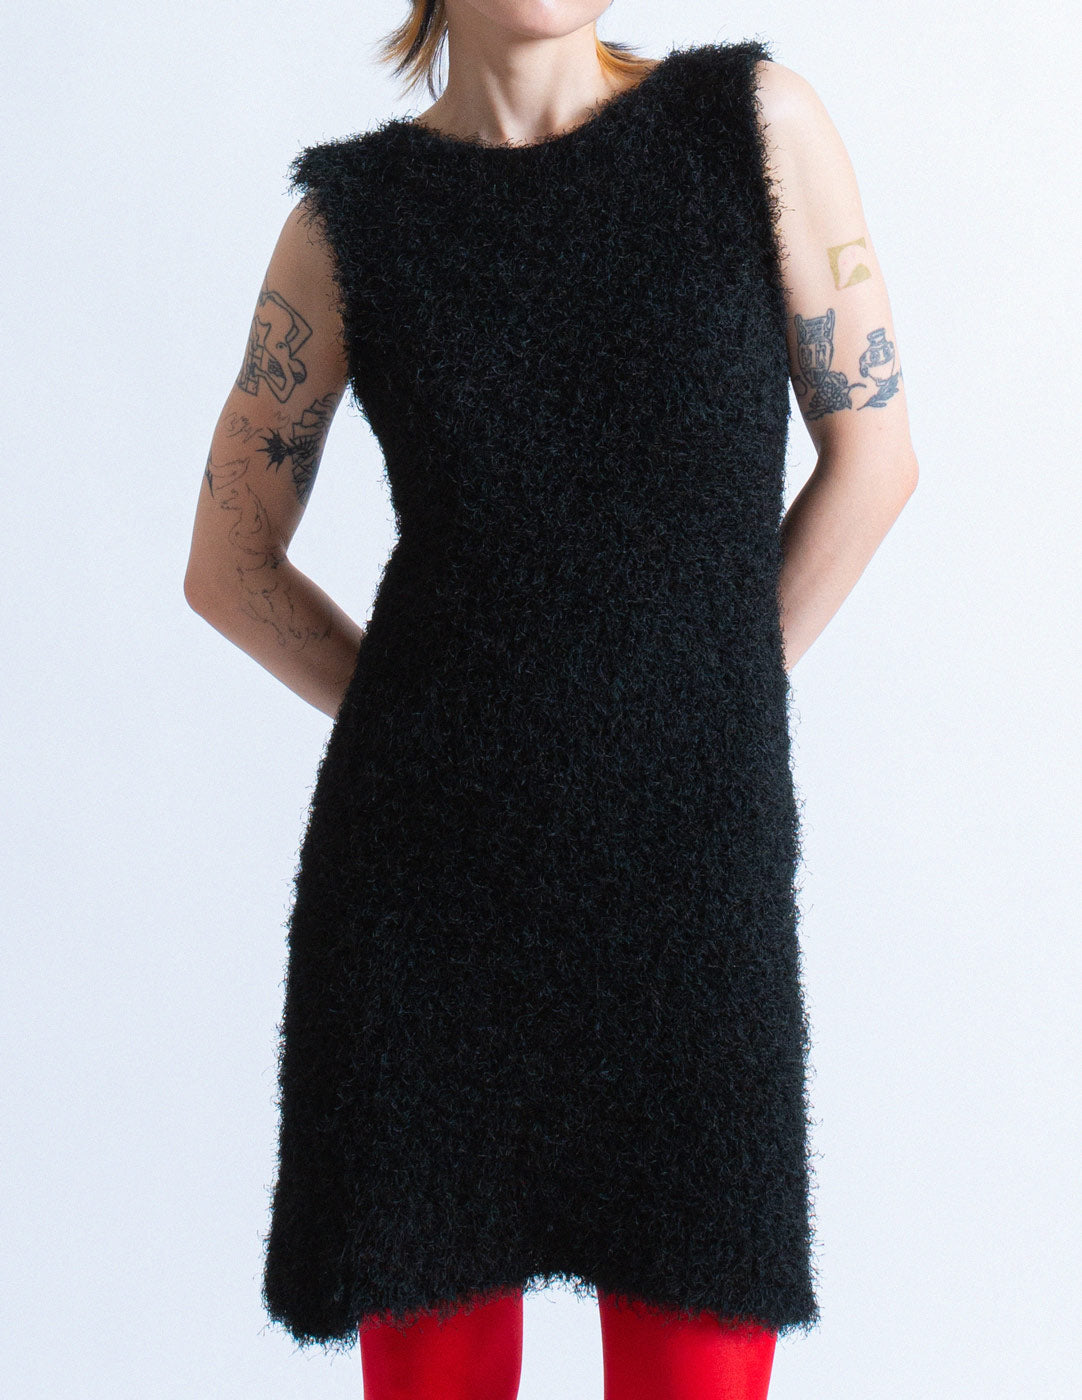 Issey Miyake black fuzzy dress front detail